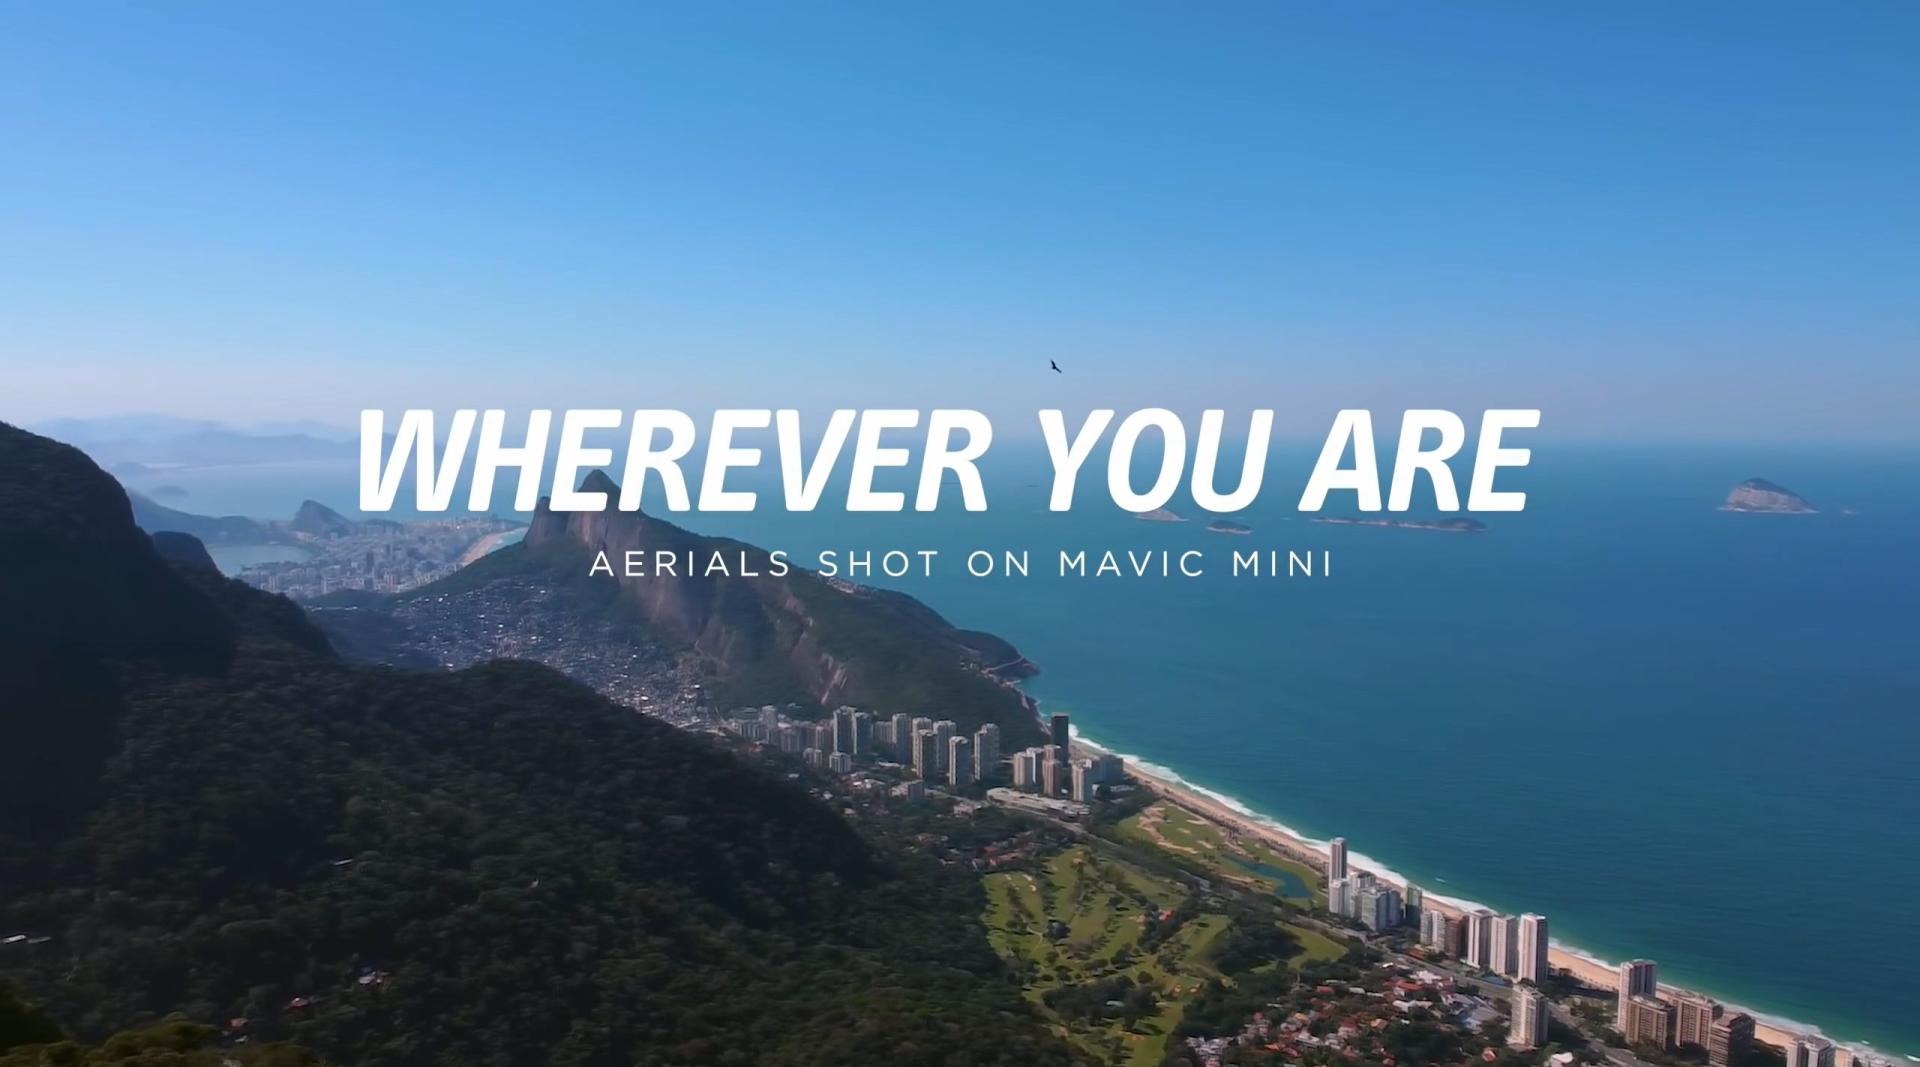 DJI Mavic Mini - Wherever You Are